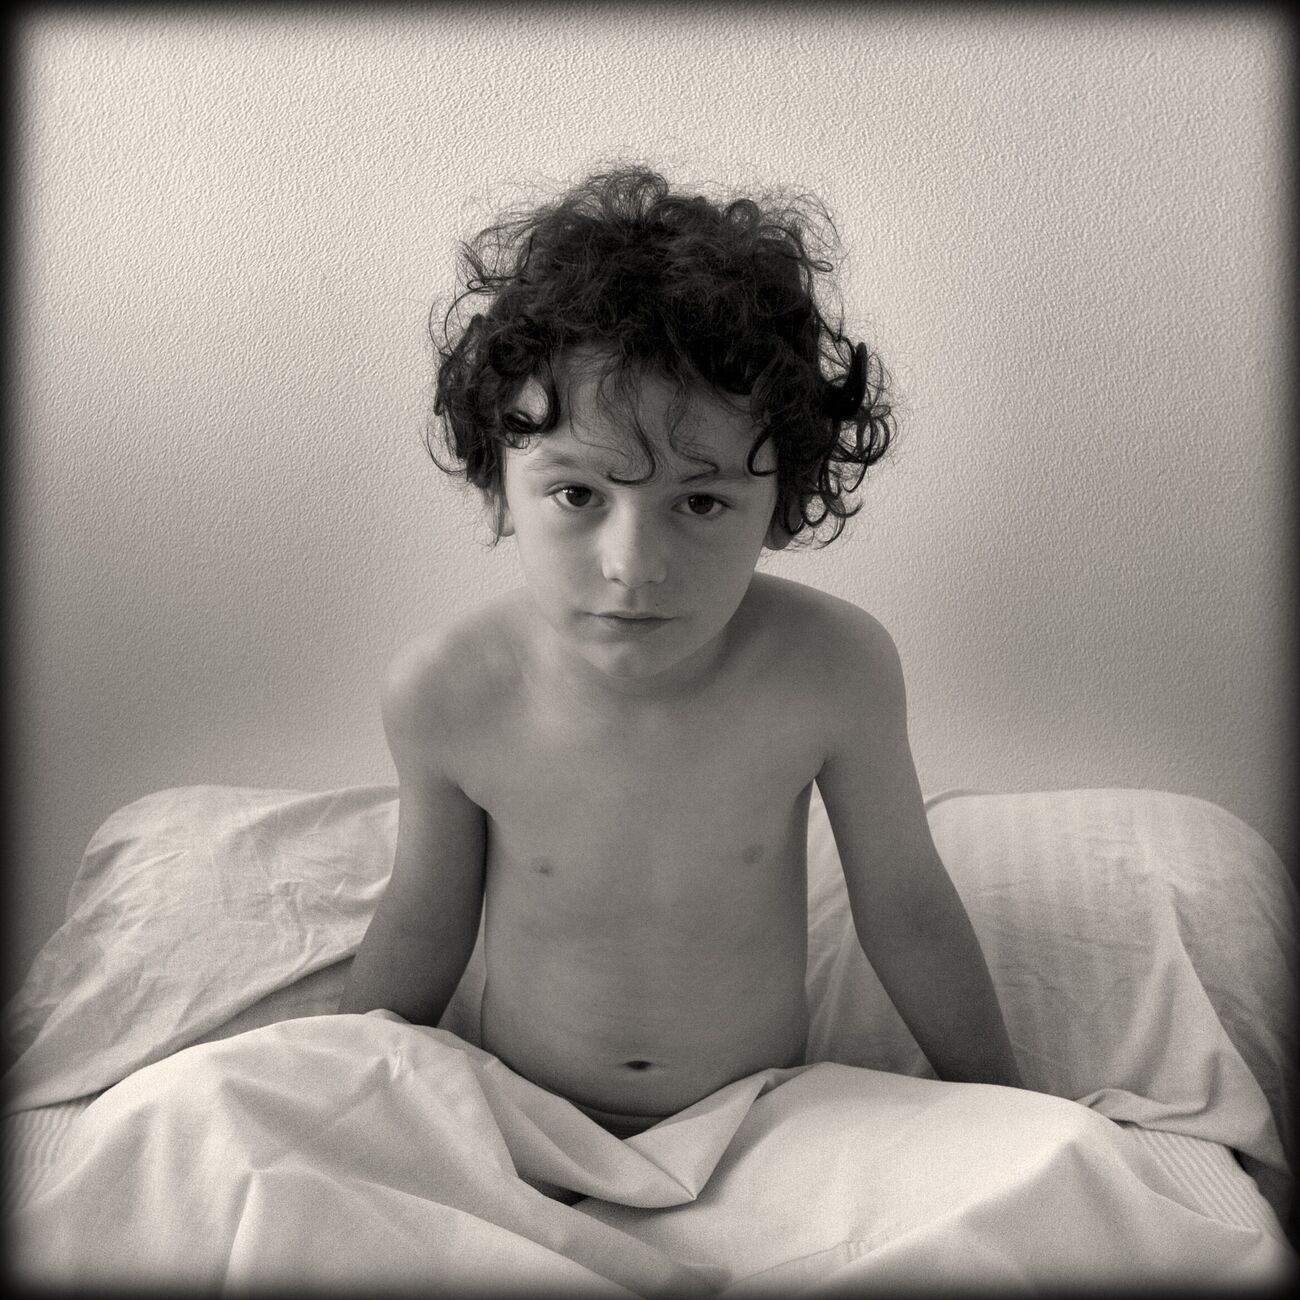 Acheter une photographie 40 x 40 cm, The waking. Ref-690-12 - Denis Olivier Photographie d'Art